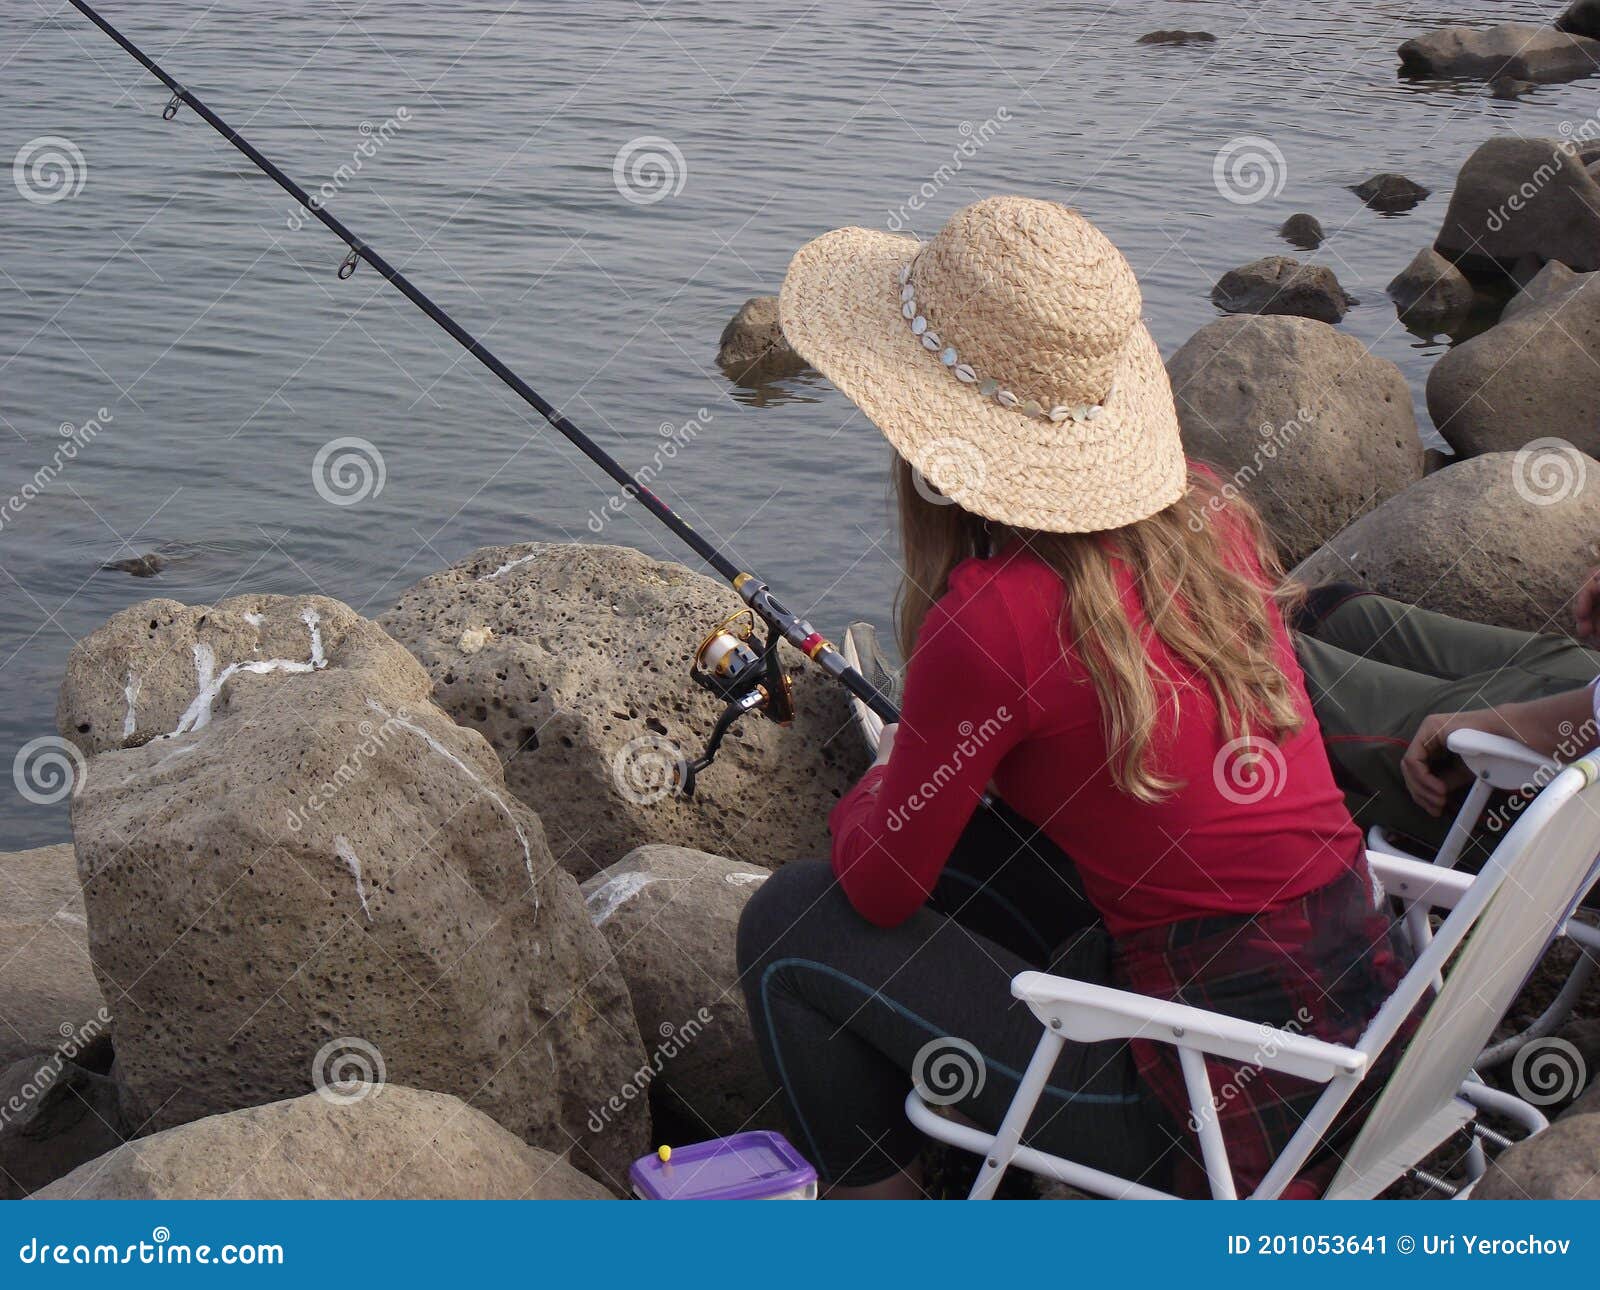 https://thumbs.dreamstime.com/z/girl-straw-hat-fishing-rod-sitting-chair-lake-next-to-guy-girl-lays-bait-fishing-rod-hook-sits-201053641.jpg